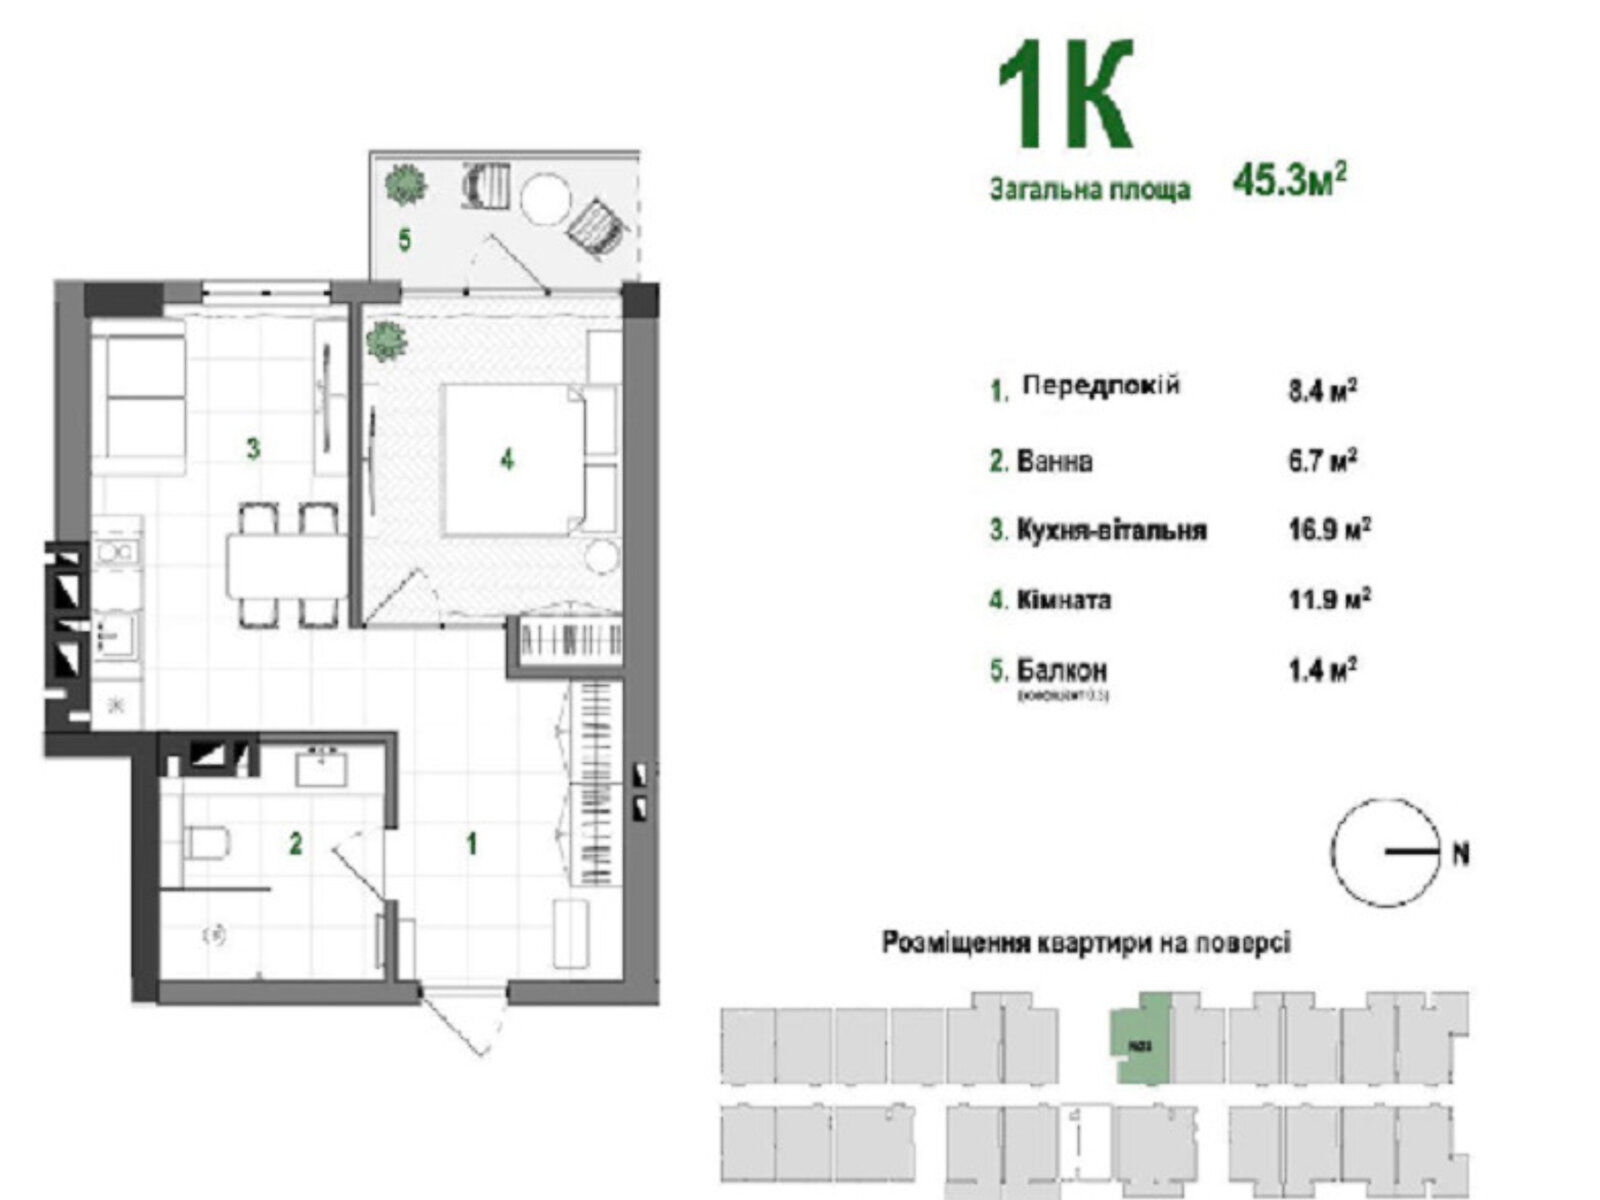 Продажа однокомнатной квартиры в Поляниця, на ул. Прелуки, фото 1